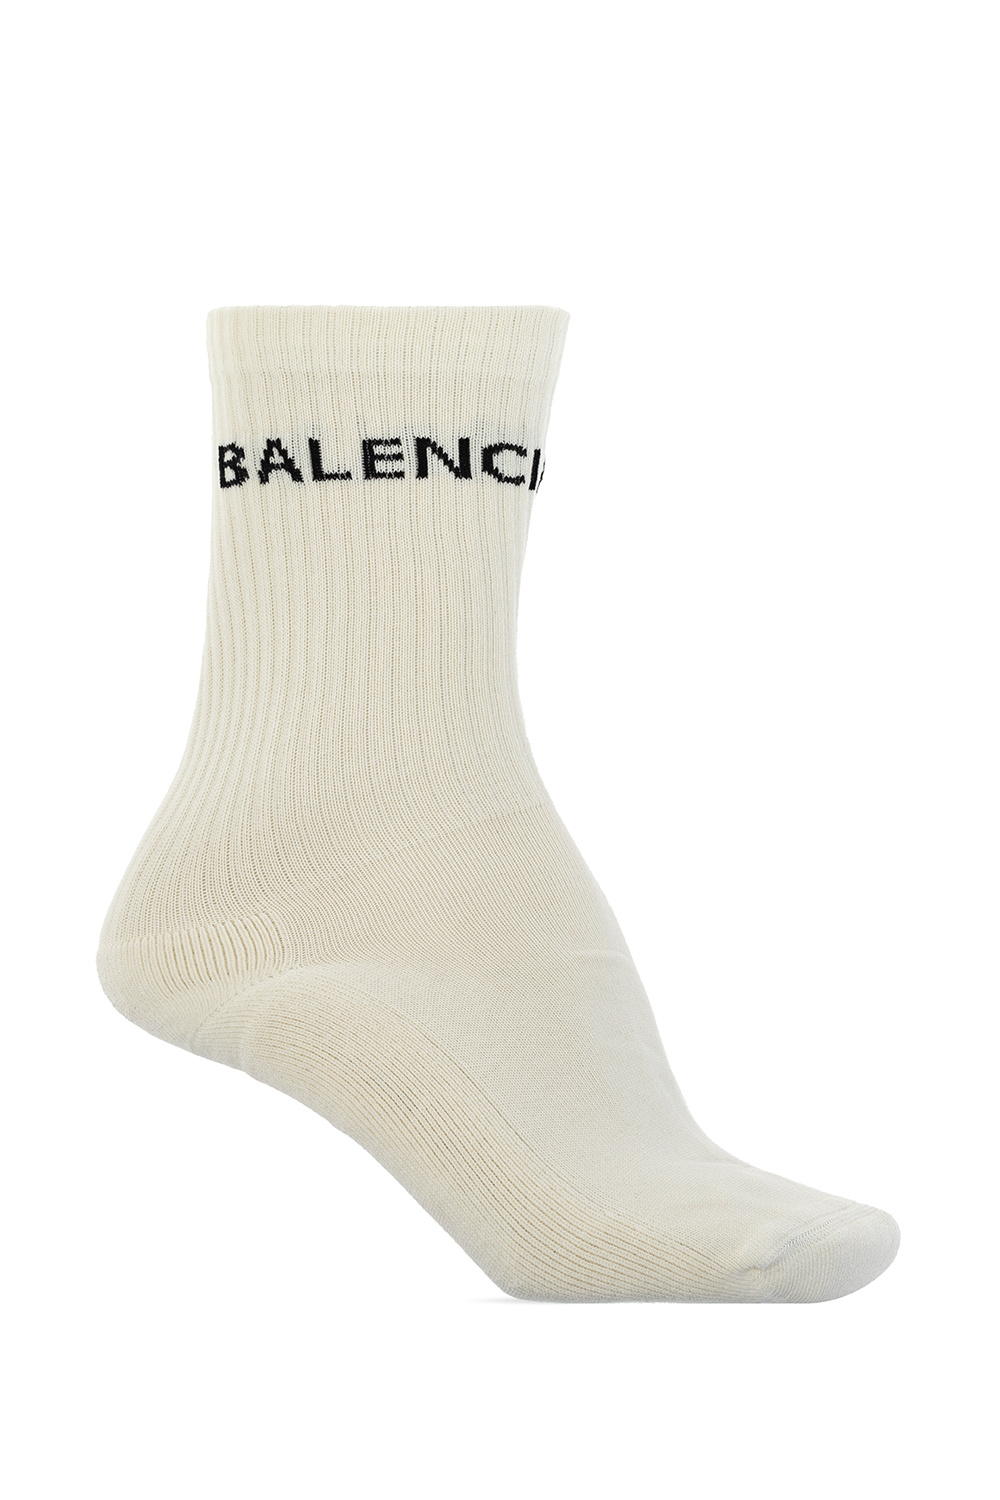 Balenciaga Discover our suggestions